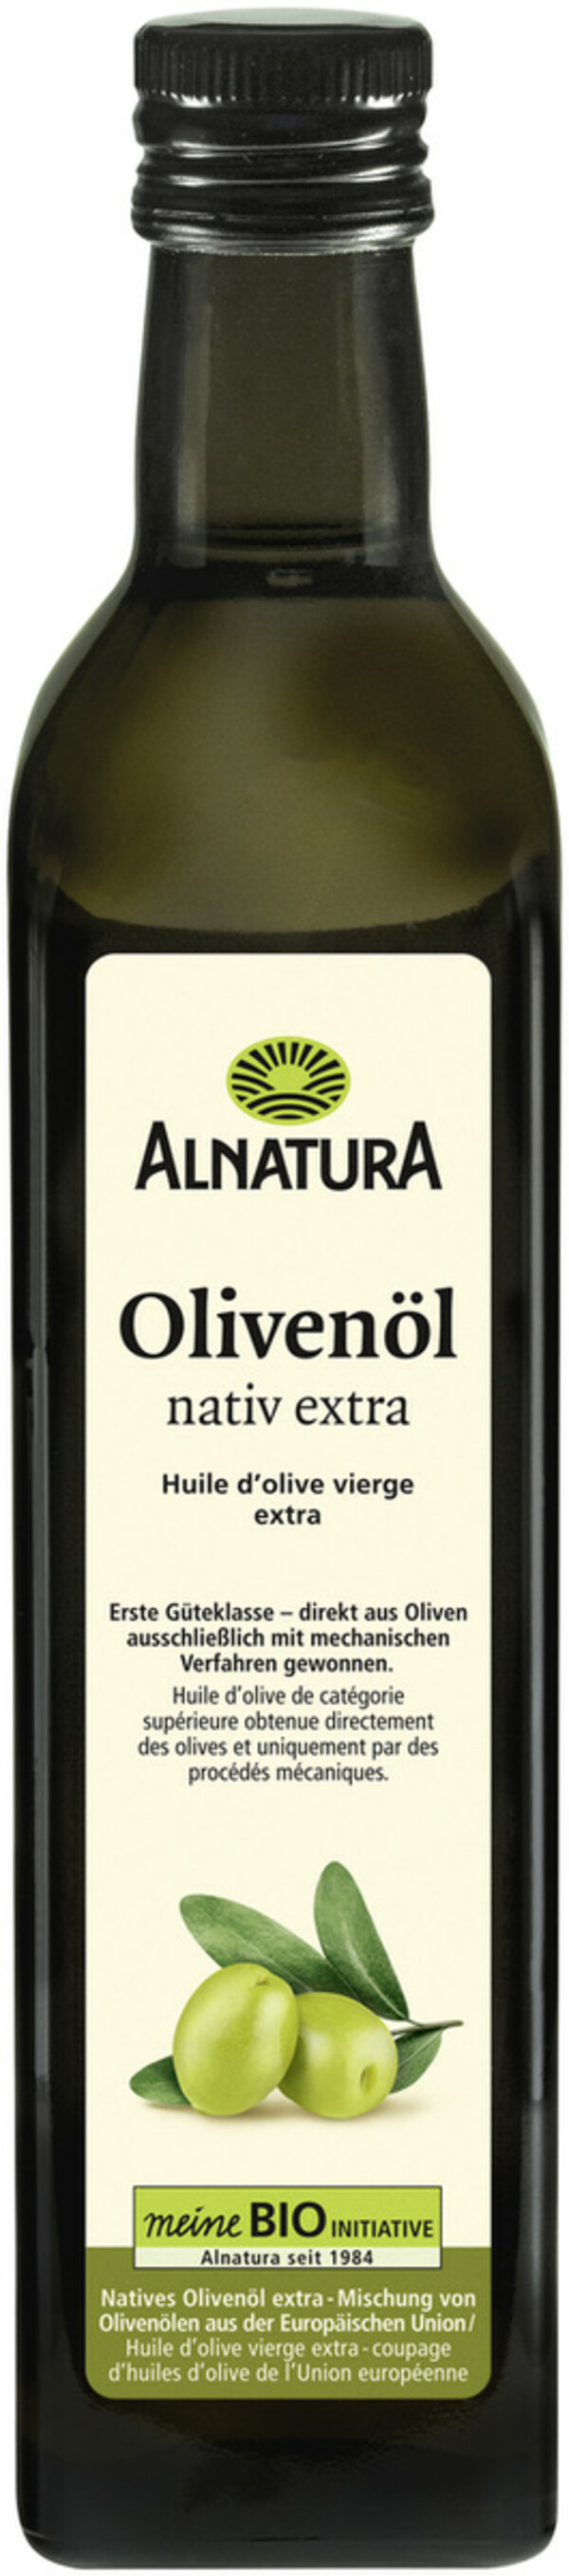 Bild 1 von Alnatura Bio Olivenöl nativ extra 0,5L